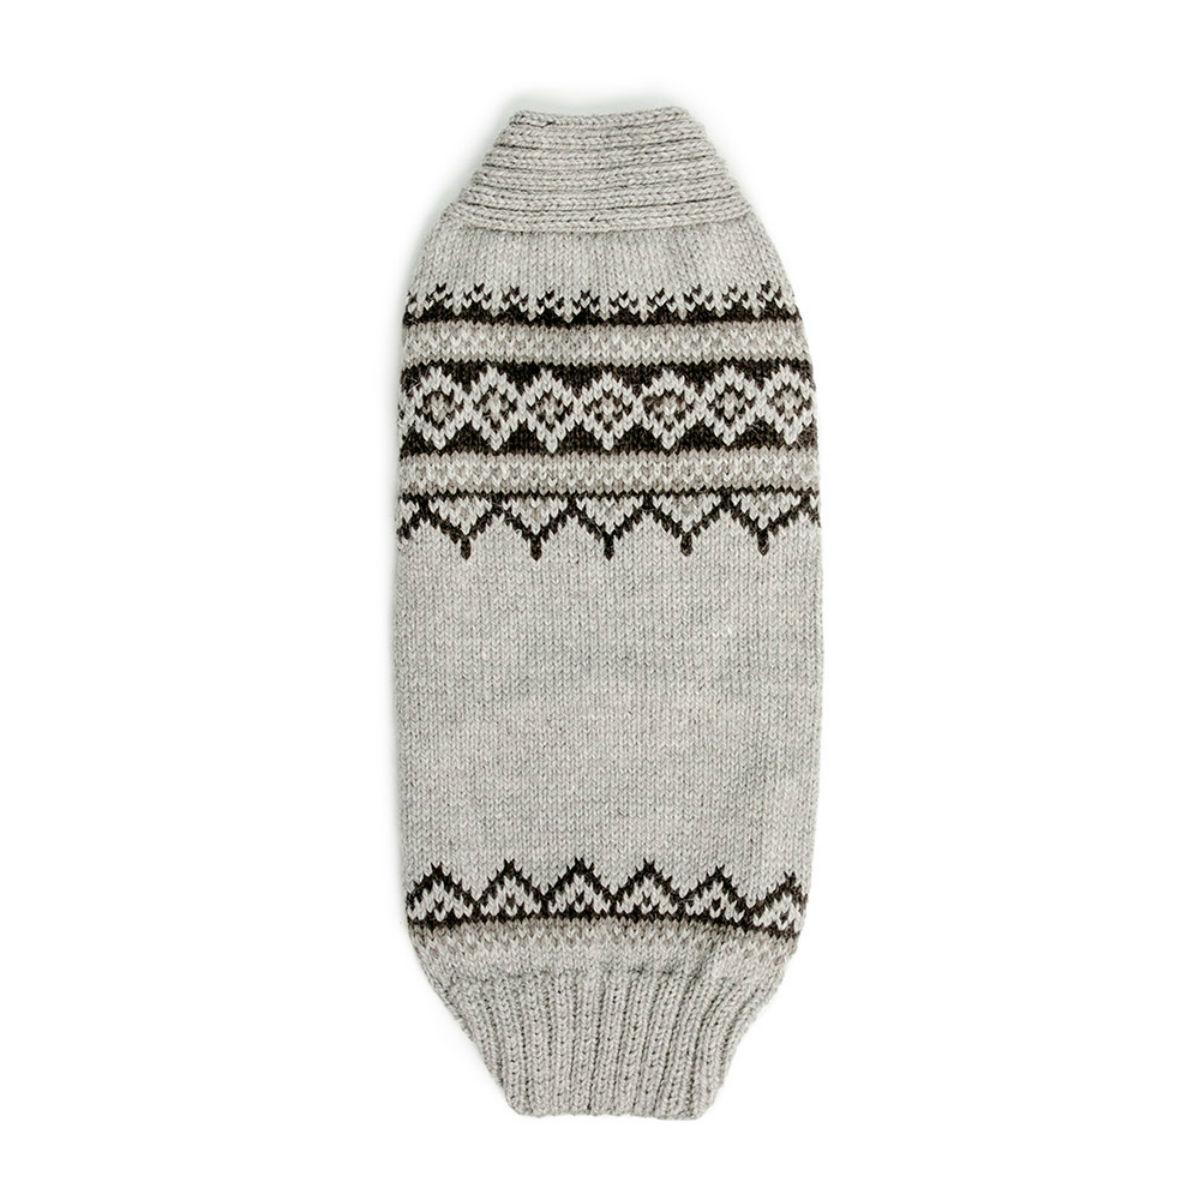 Chilly Dog Handmade Alpaca Wool Wyatt Dog Sweater - Smokey Pewter